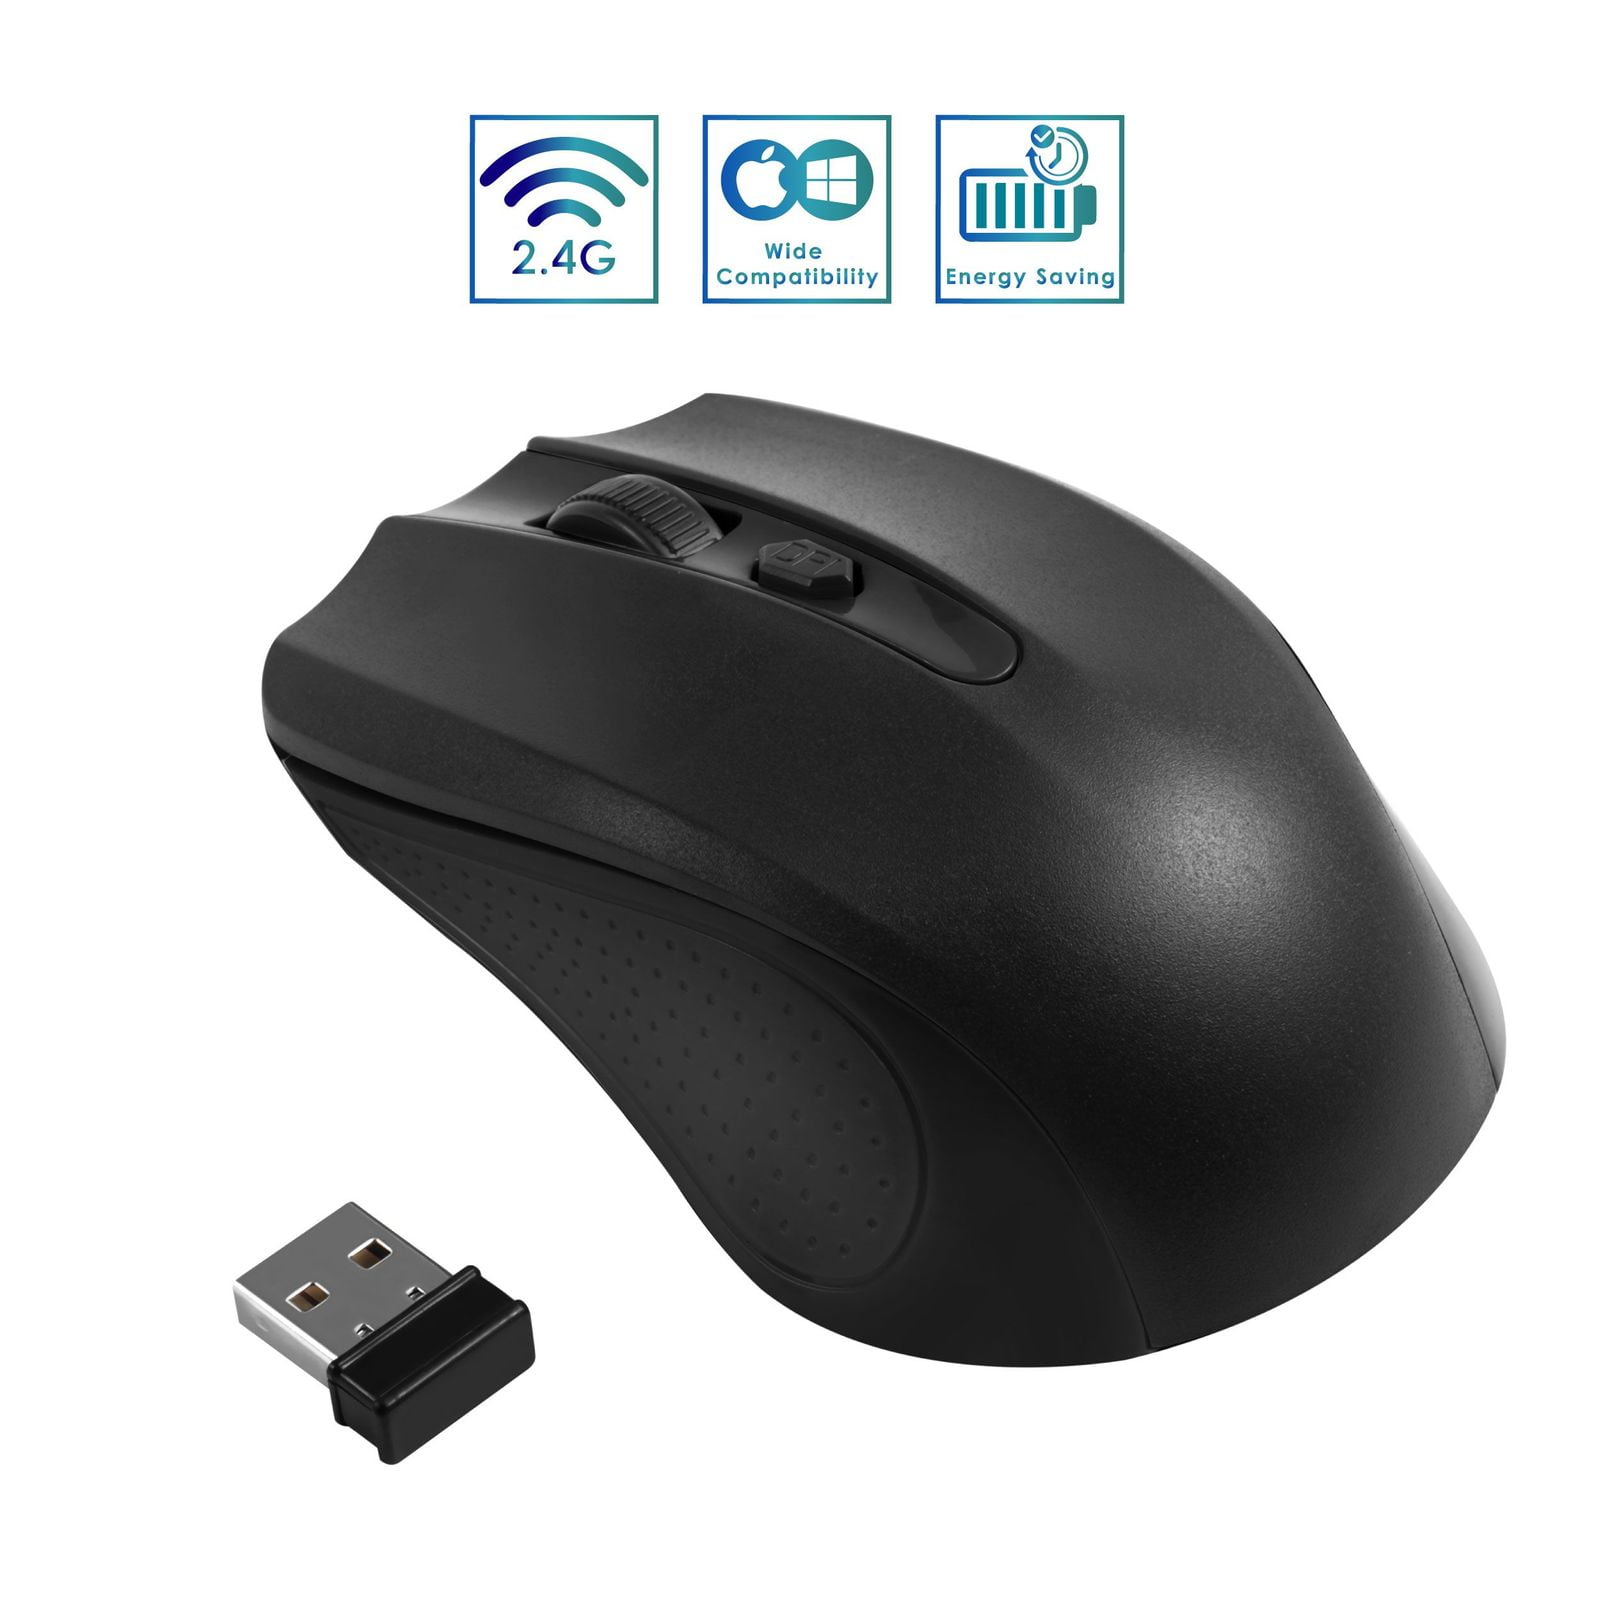 2.4G Wireless Mouse Nano USB Receiver, Portable USB Cordless Optical ...